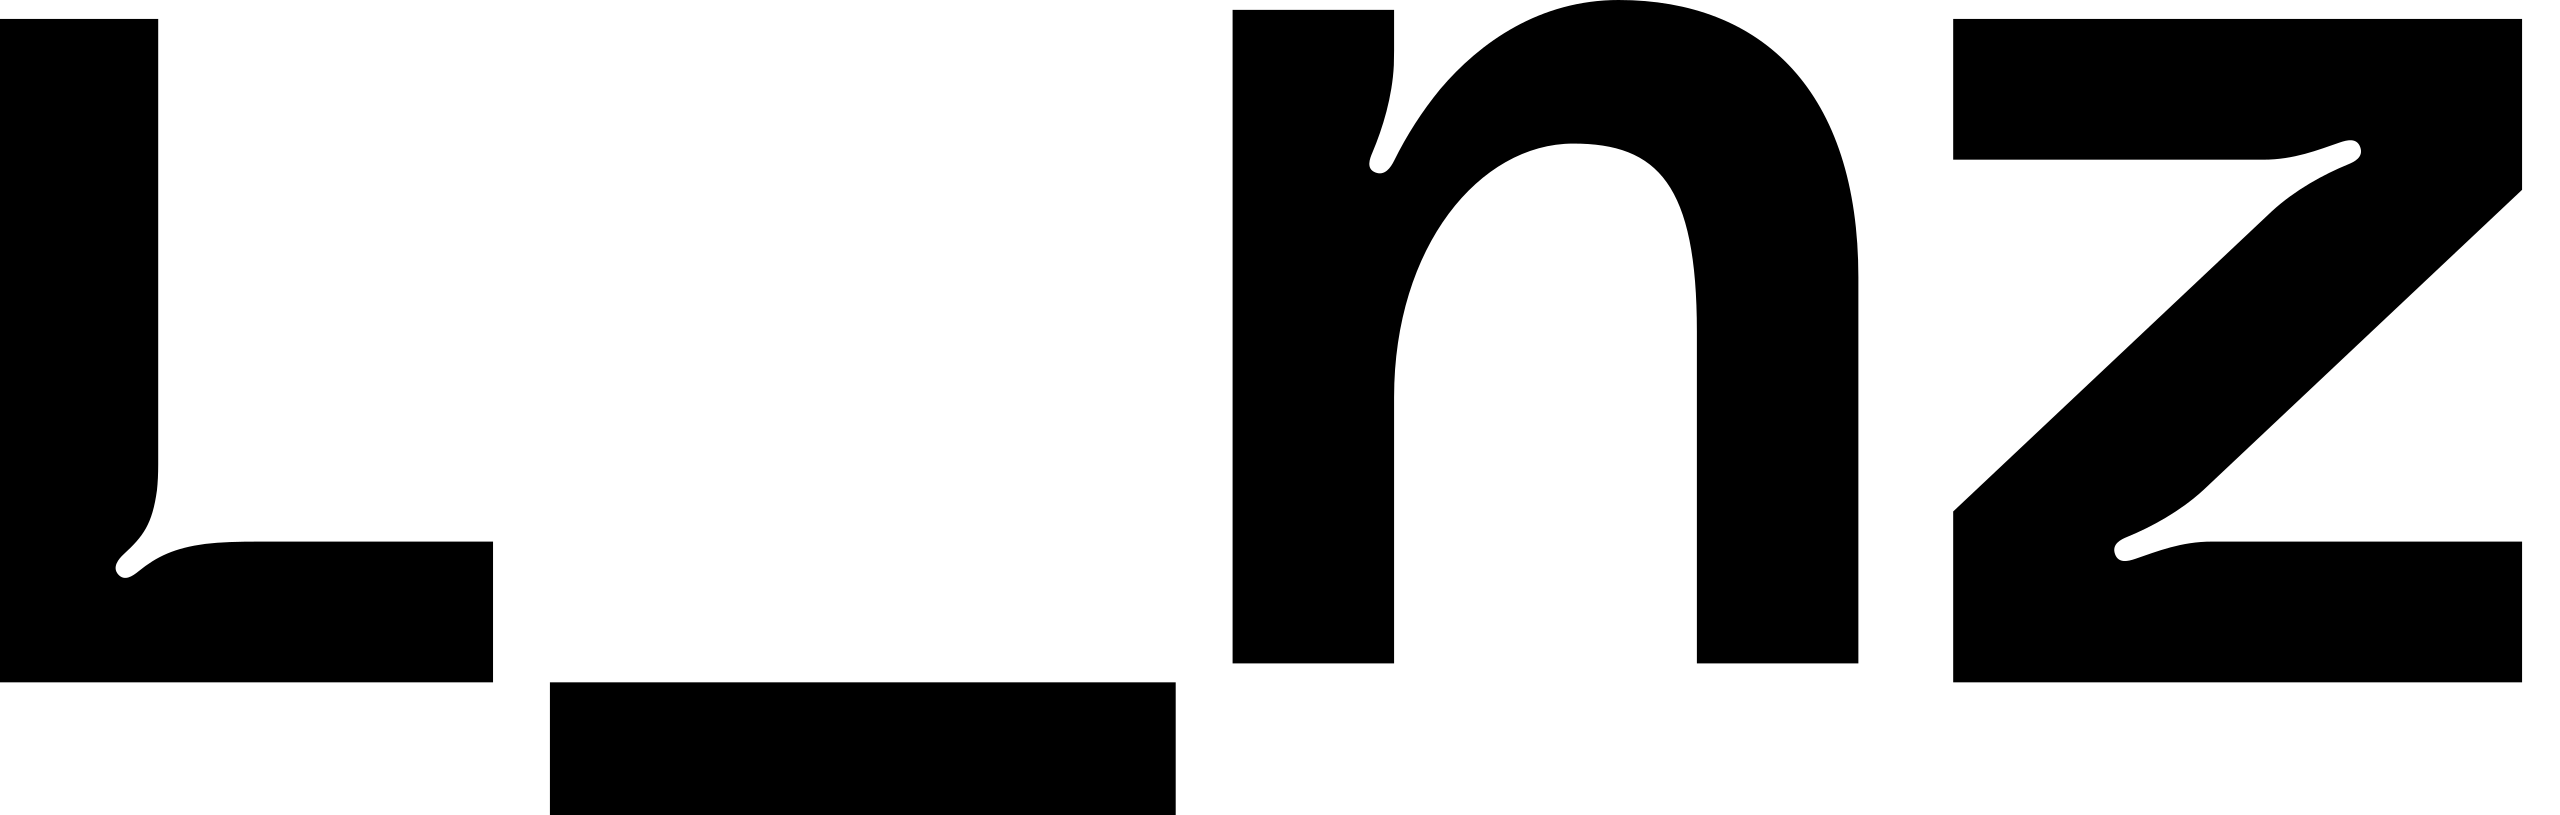 Linz_Logo.svg_